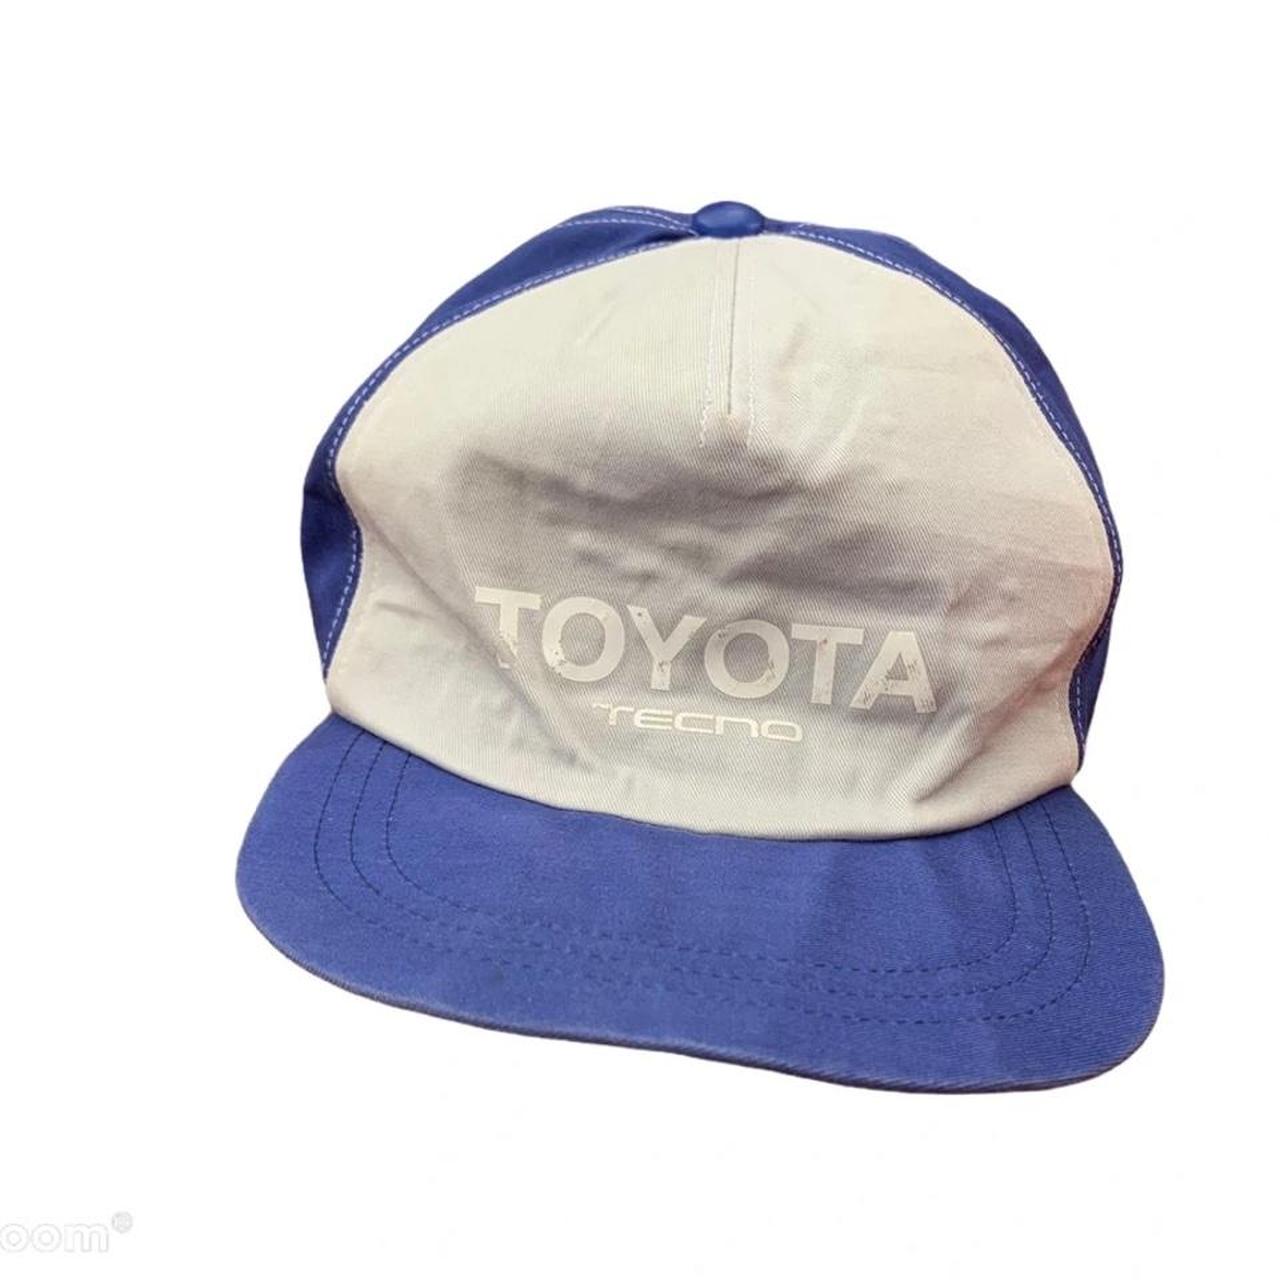 Vintage Toyota Racing Cap •good used condition - Depop